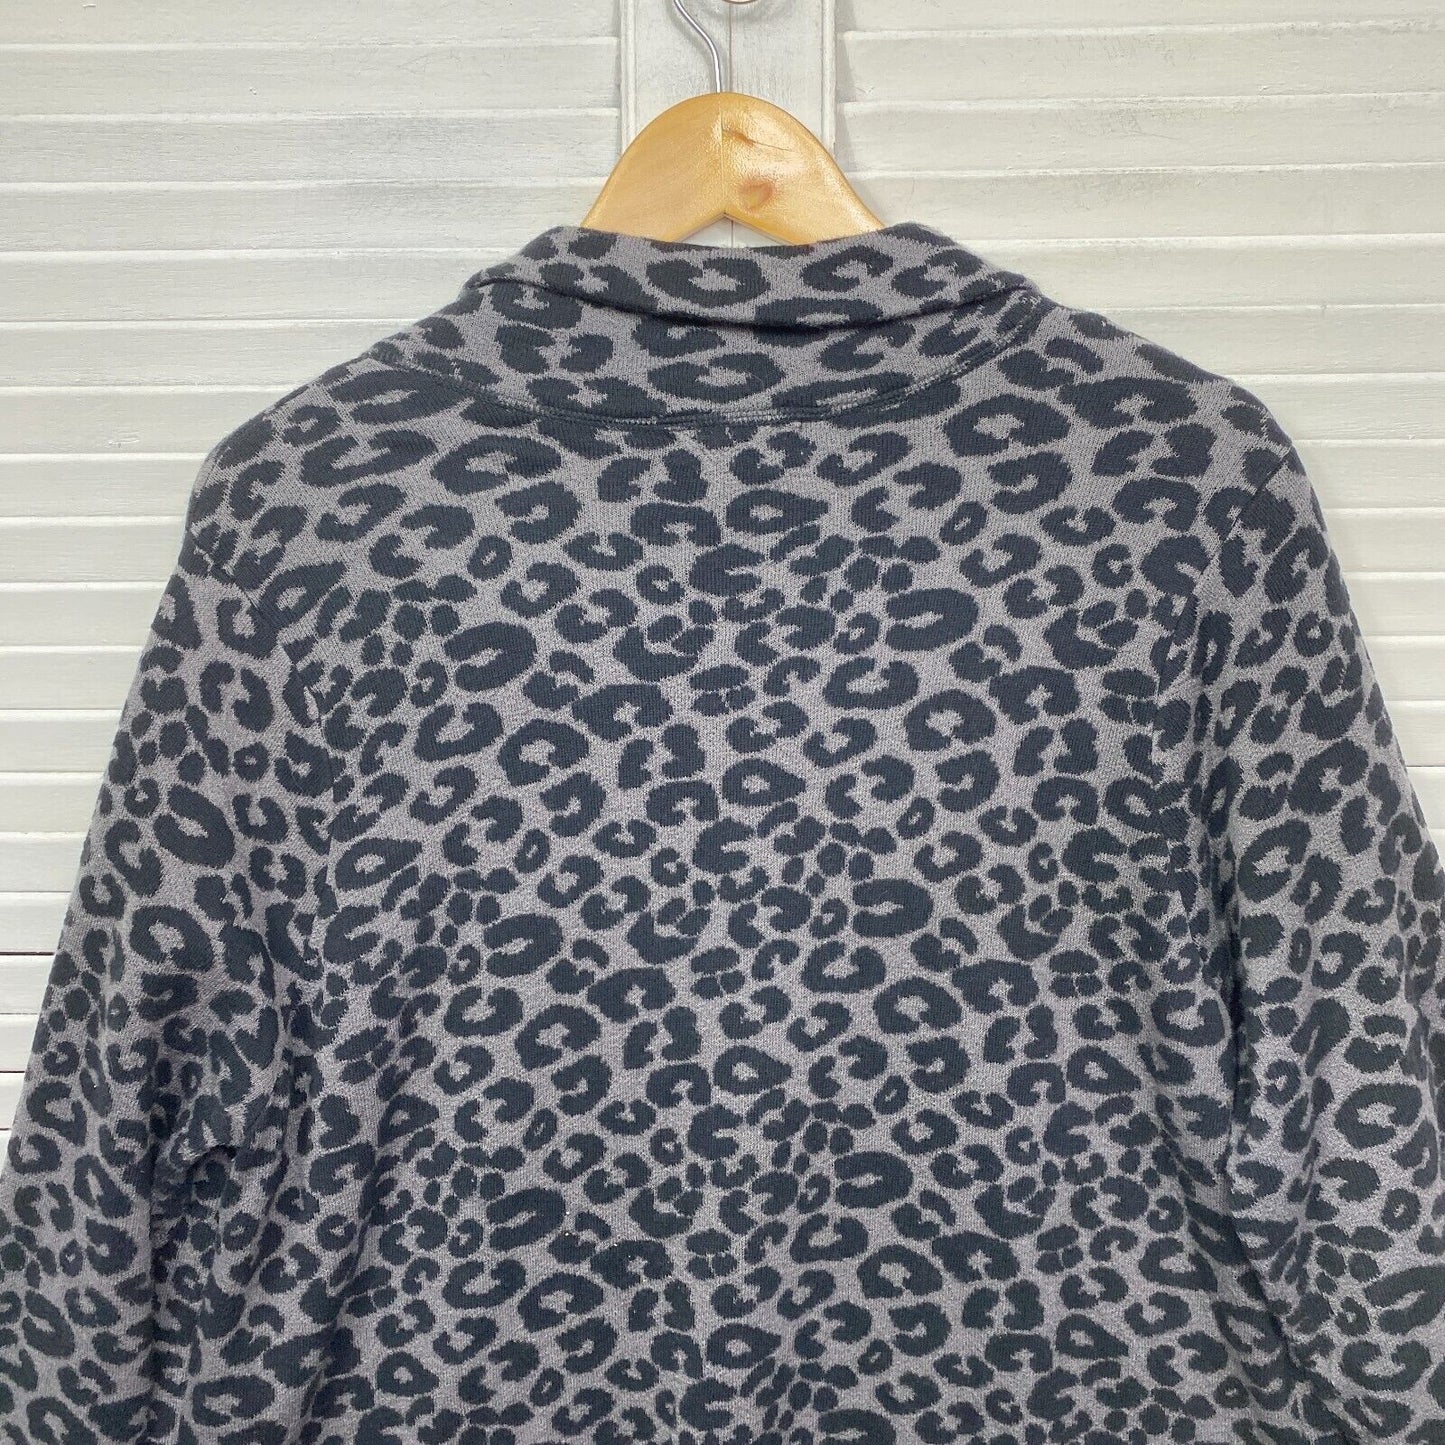 beme Jacket Jumper Size 16 Plus Small Grey Black Long Sleeve Animal Print Preloved